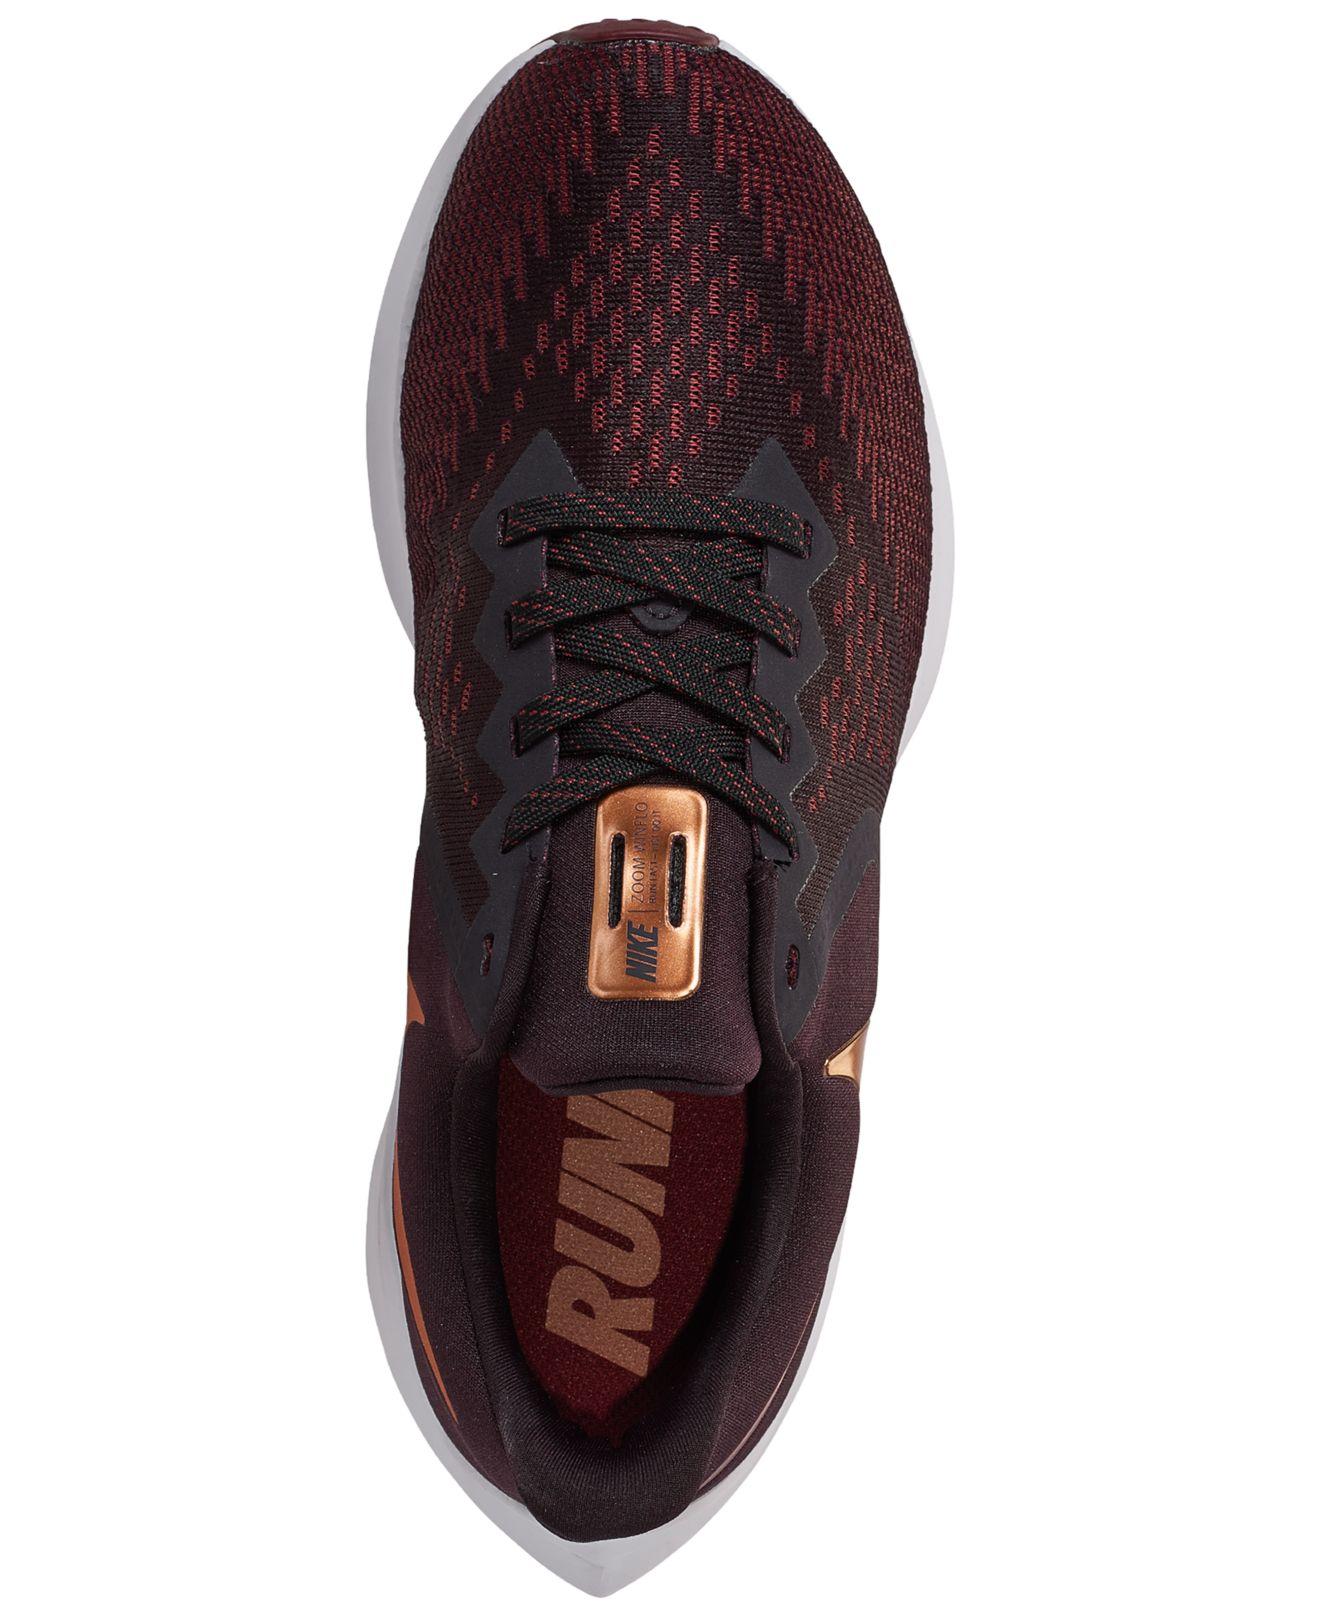 nike women's zoom winflo 6 running shoes burgundy ash